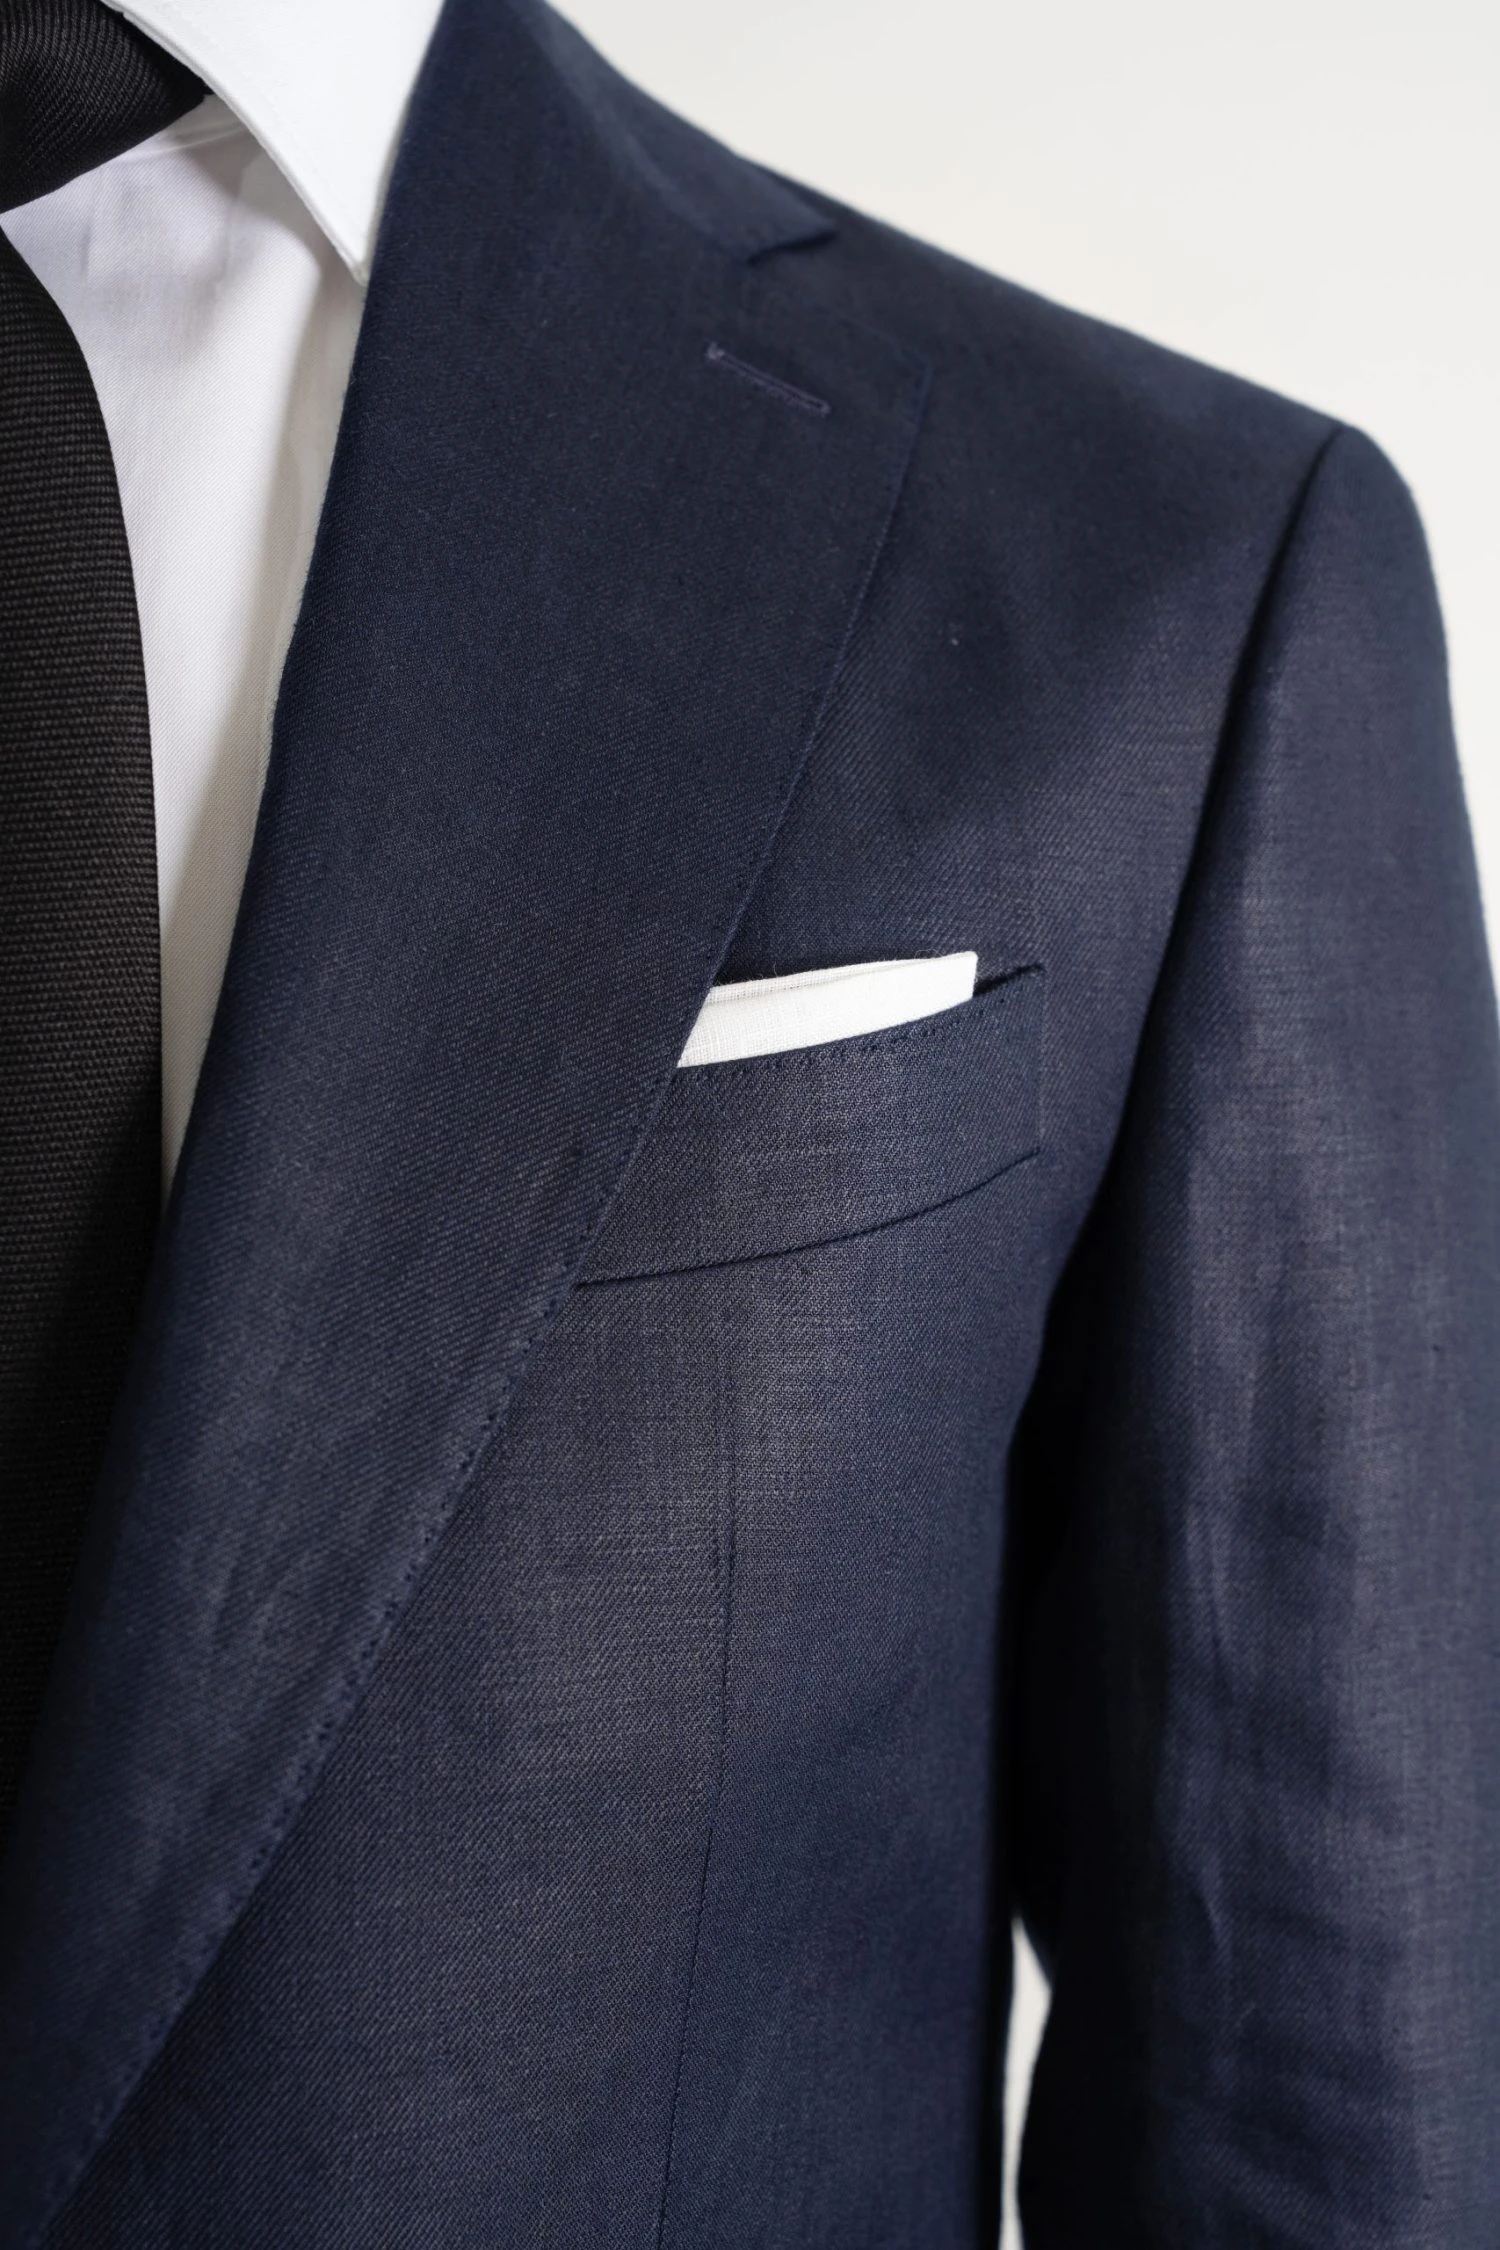 custom made navy blue linen suit